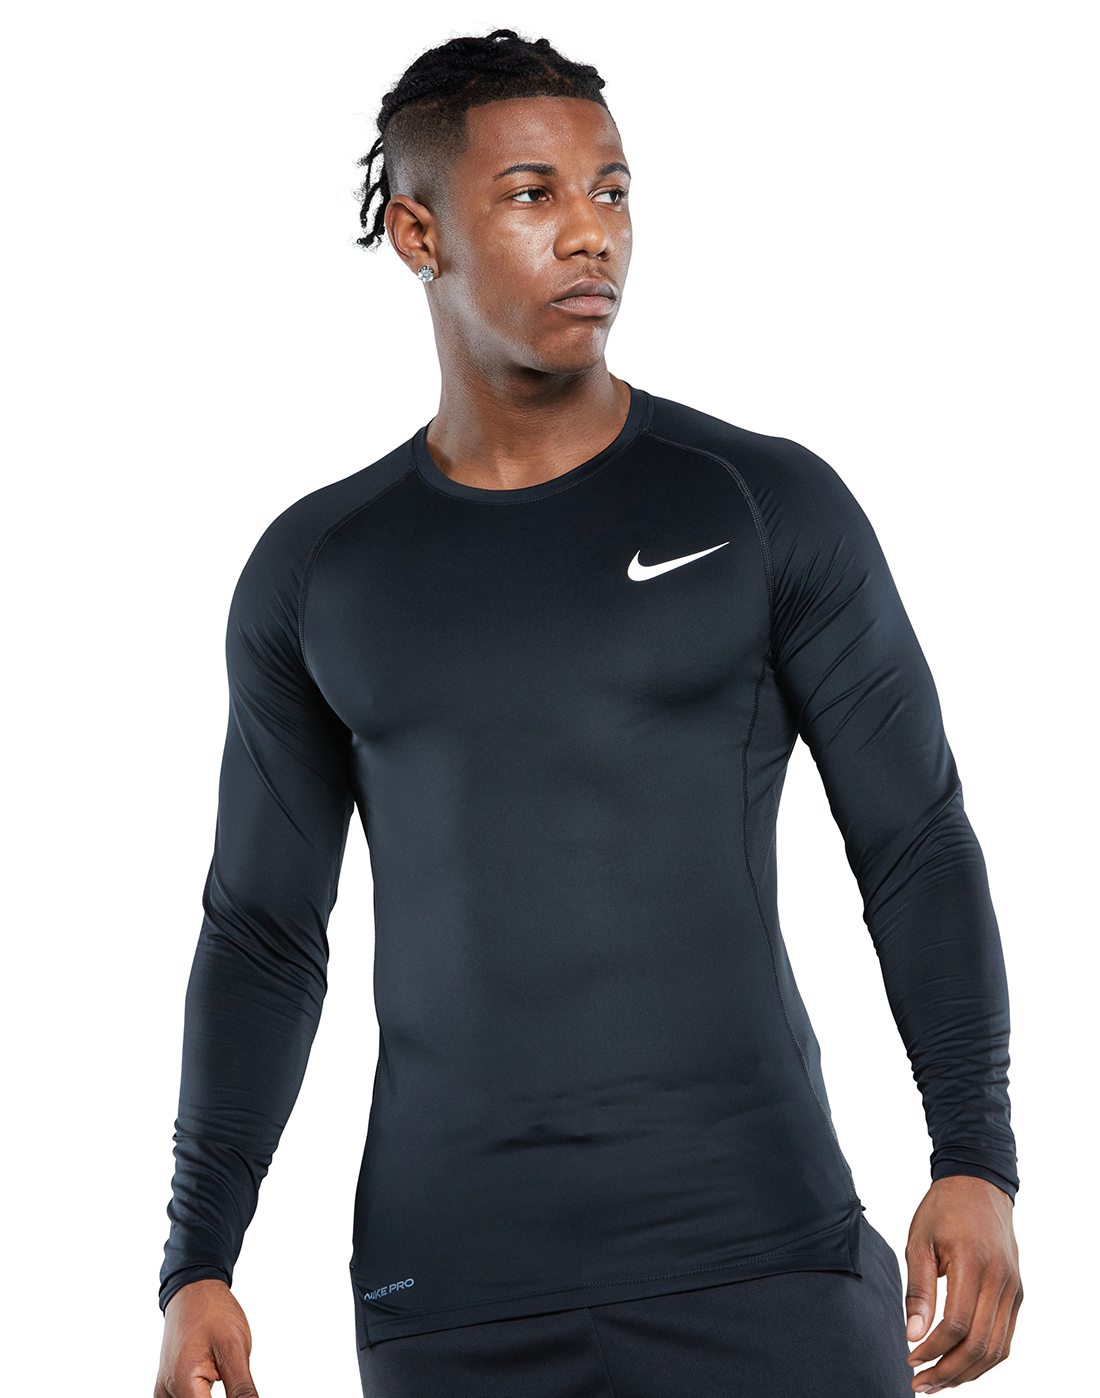 Mens Pro Baselayer Long Sleeve Top - Black | Life Sports